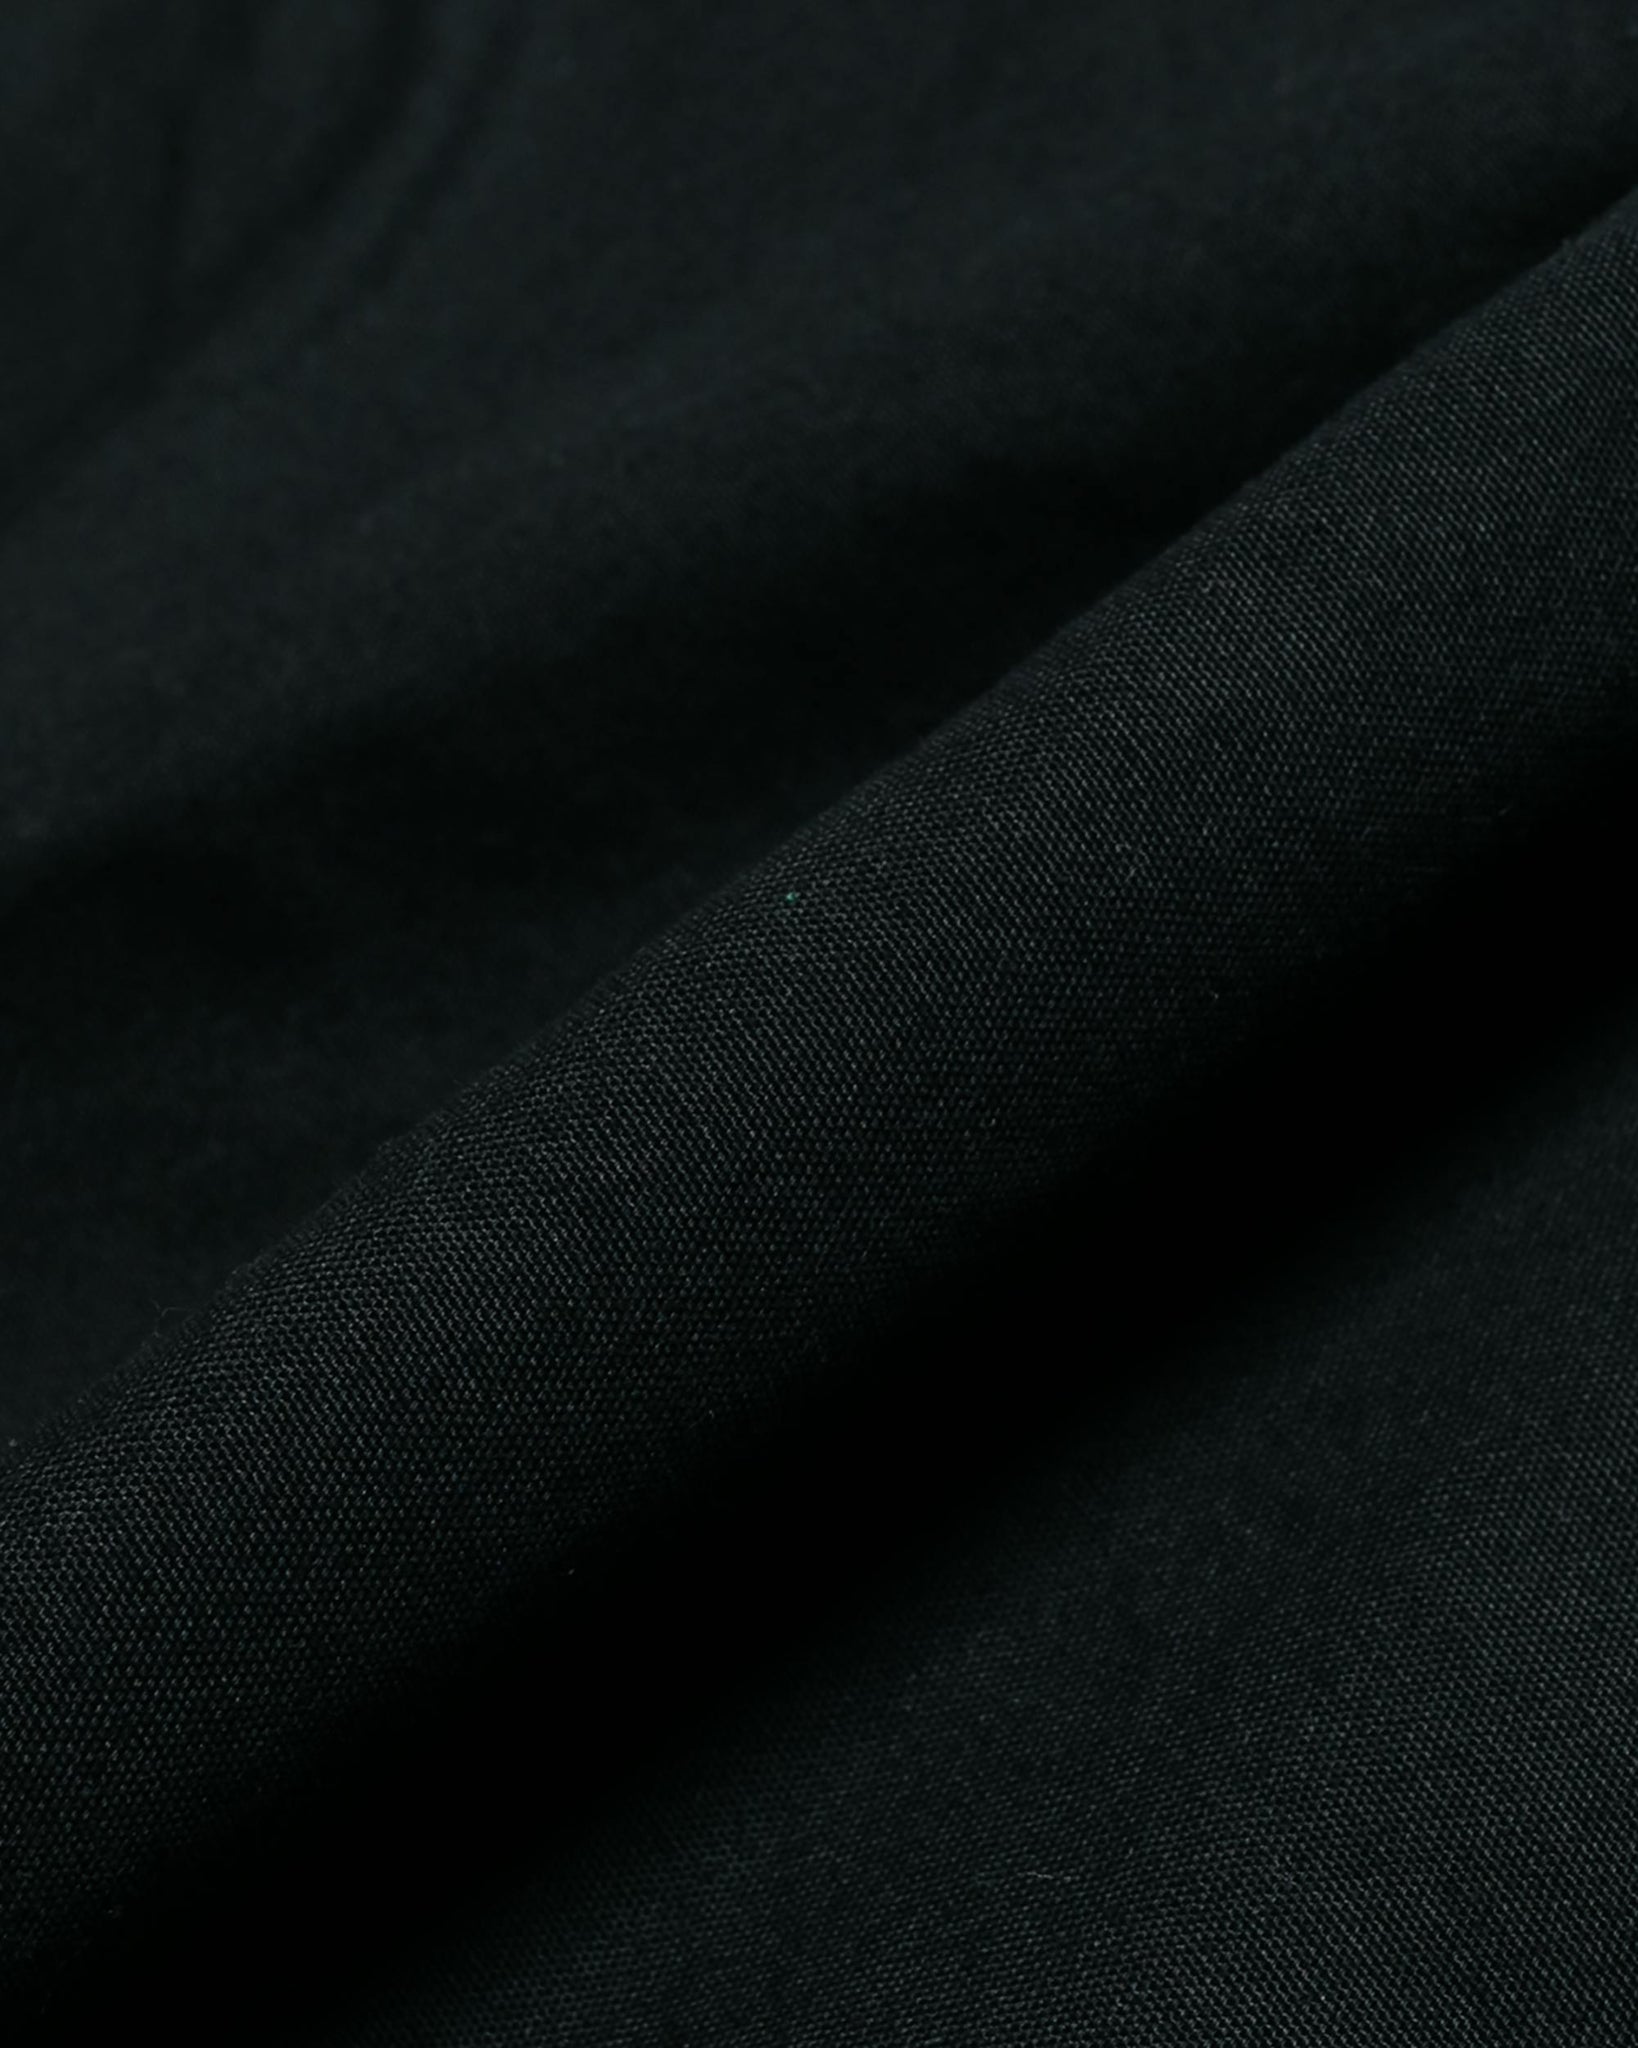 Gitman Vintage Bros. Black Overdye Oxford Short Sleeve fabric